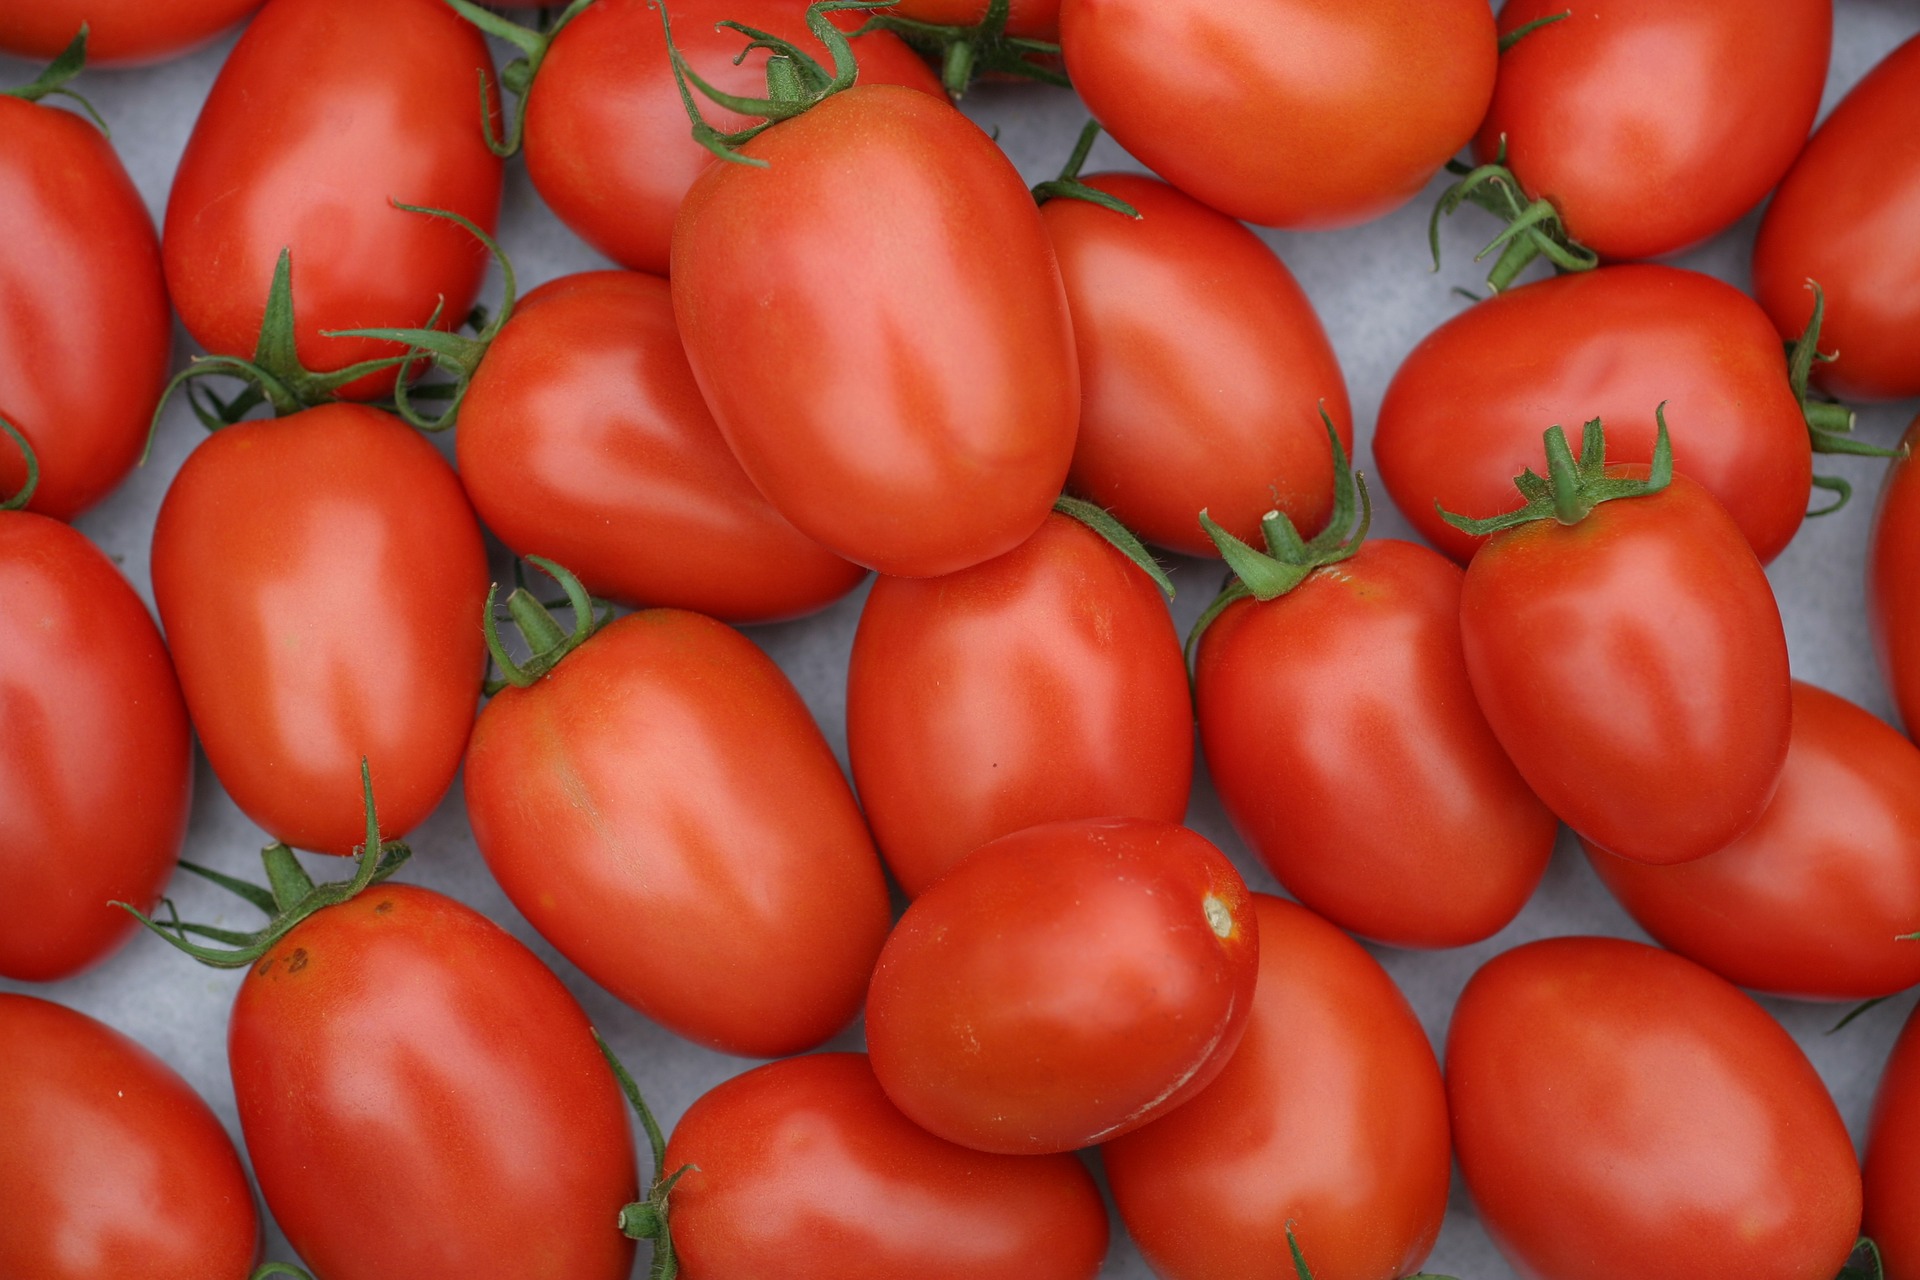 The Tomato Suspension Agreement (TSA)